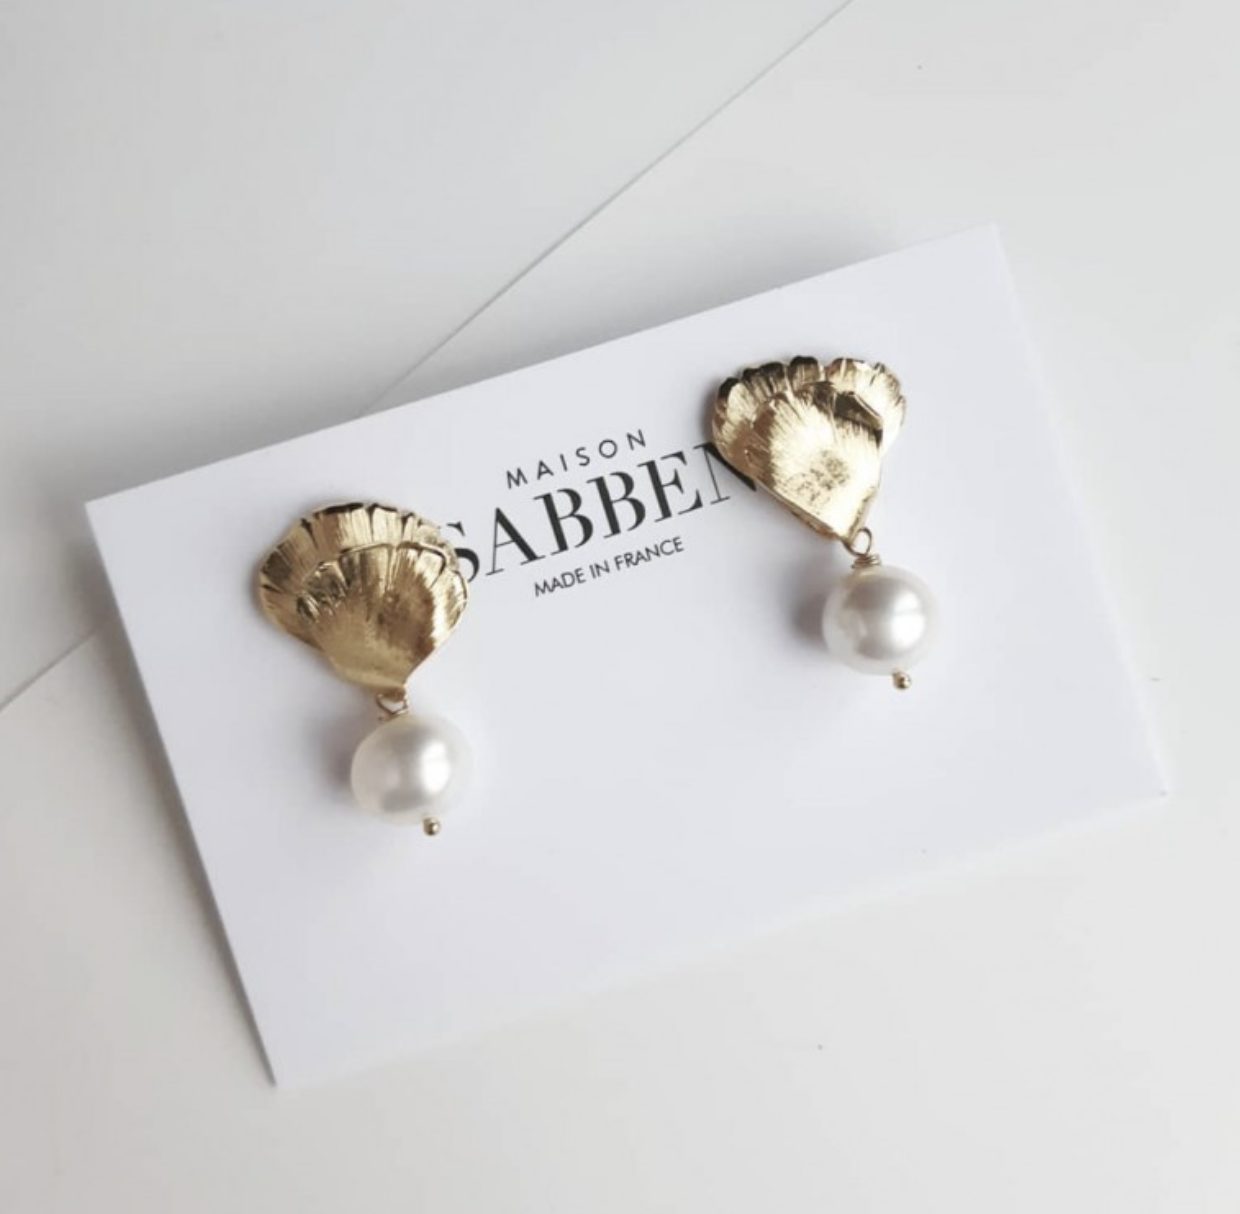 Petals, Gold & Pearl Floral Earrings by Maison Sabben